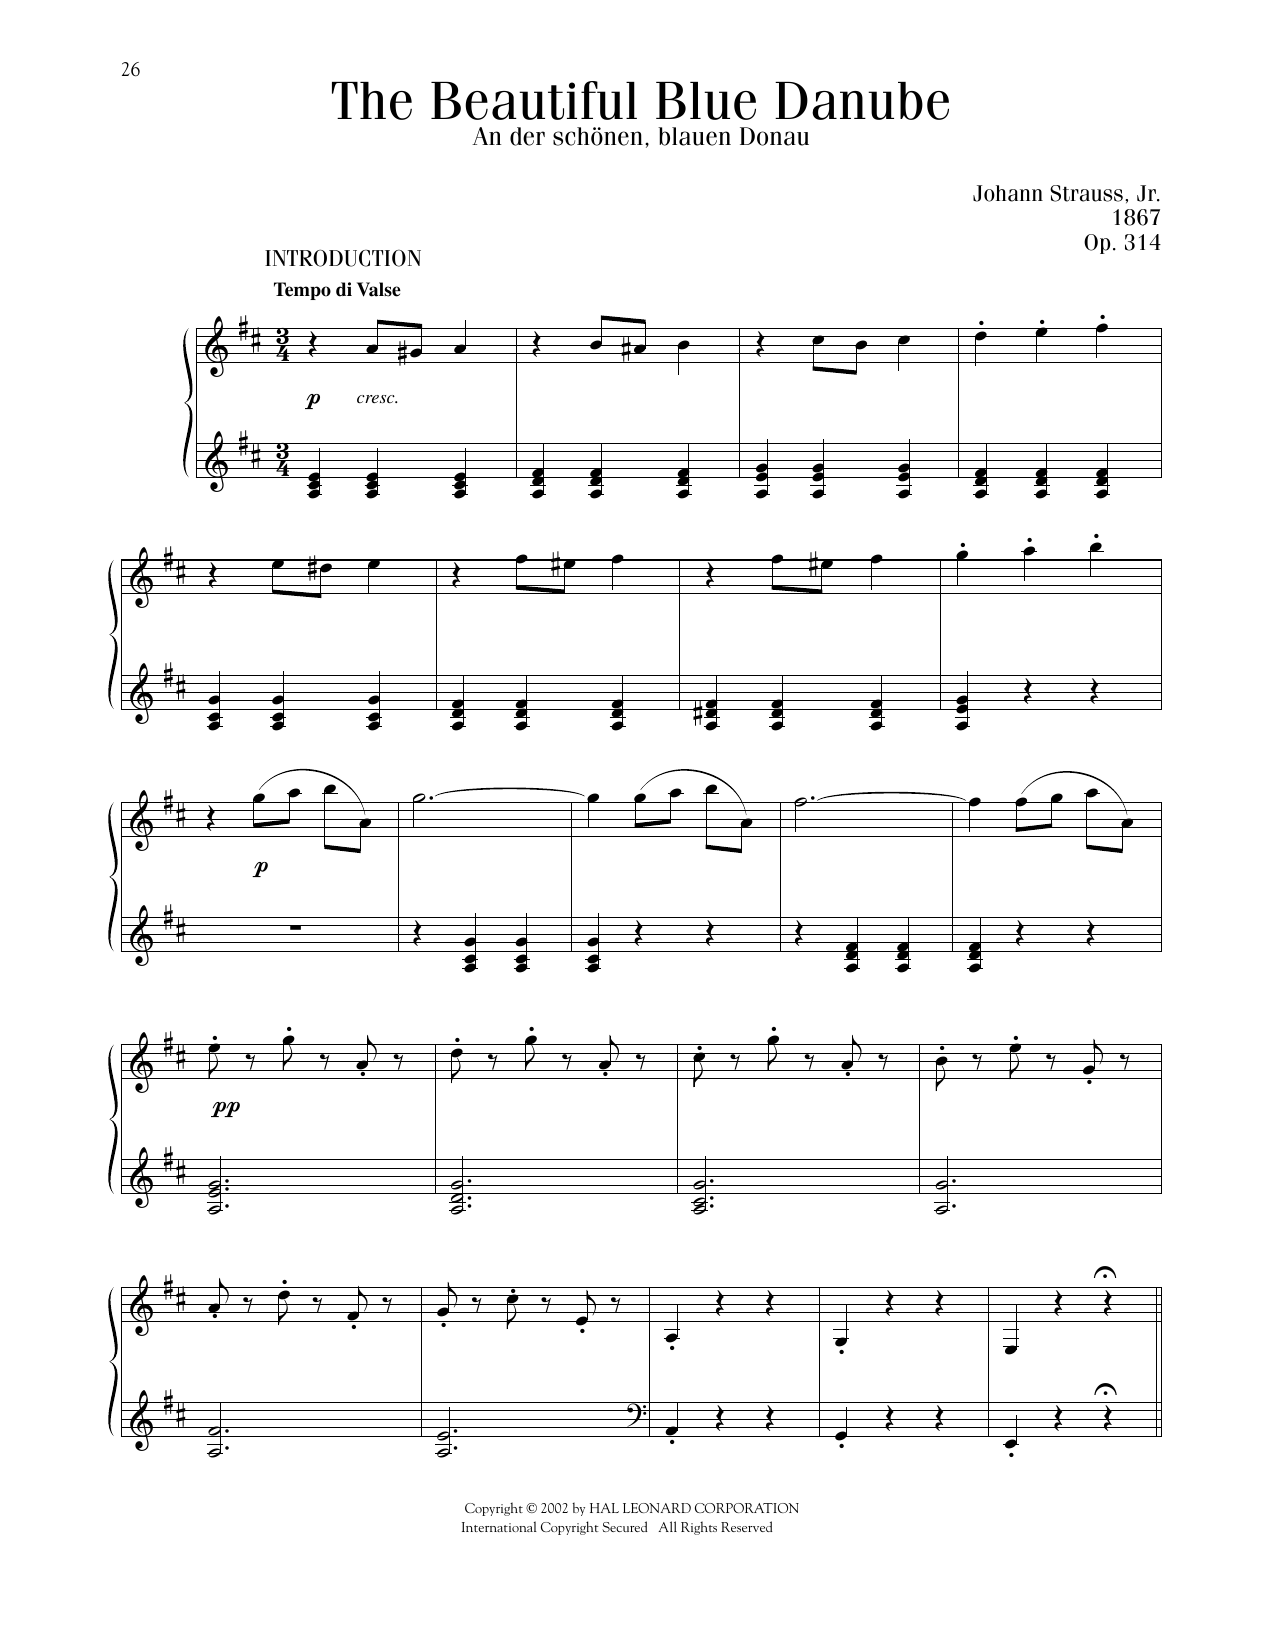 Johann Strauss The Beautiful Blue Danube, Op. 314 sheet music notes printable PDF score